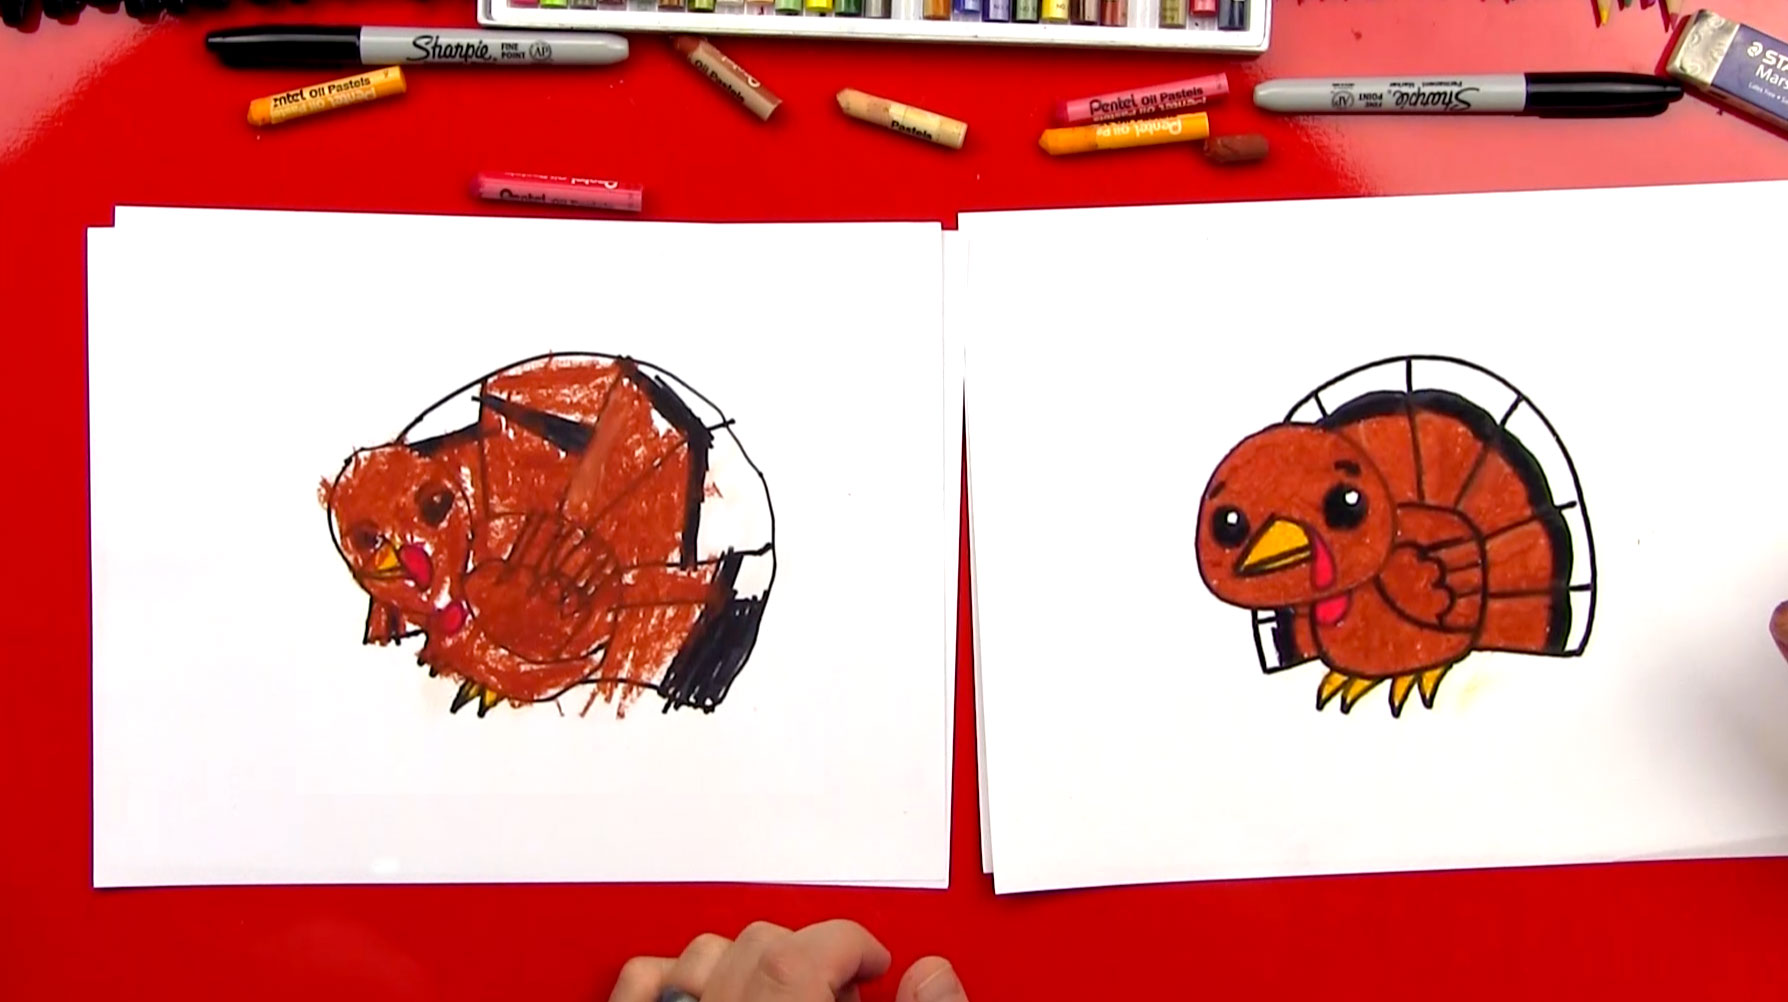 How To Draw A Cartoon Turkey Art For Kids Hub